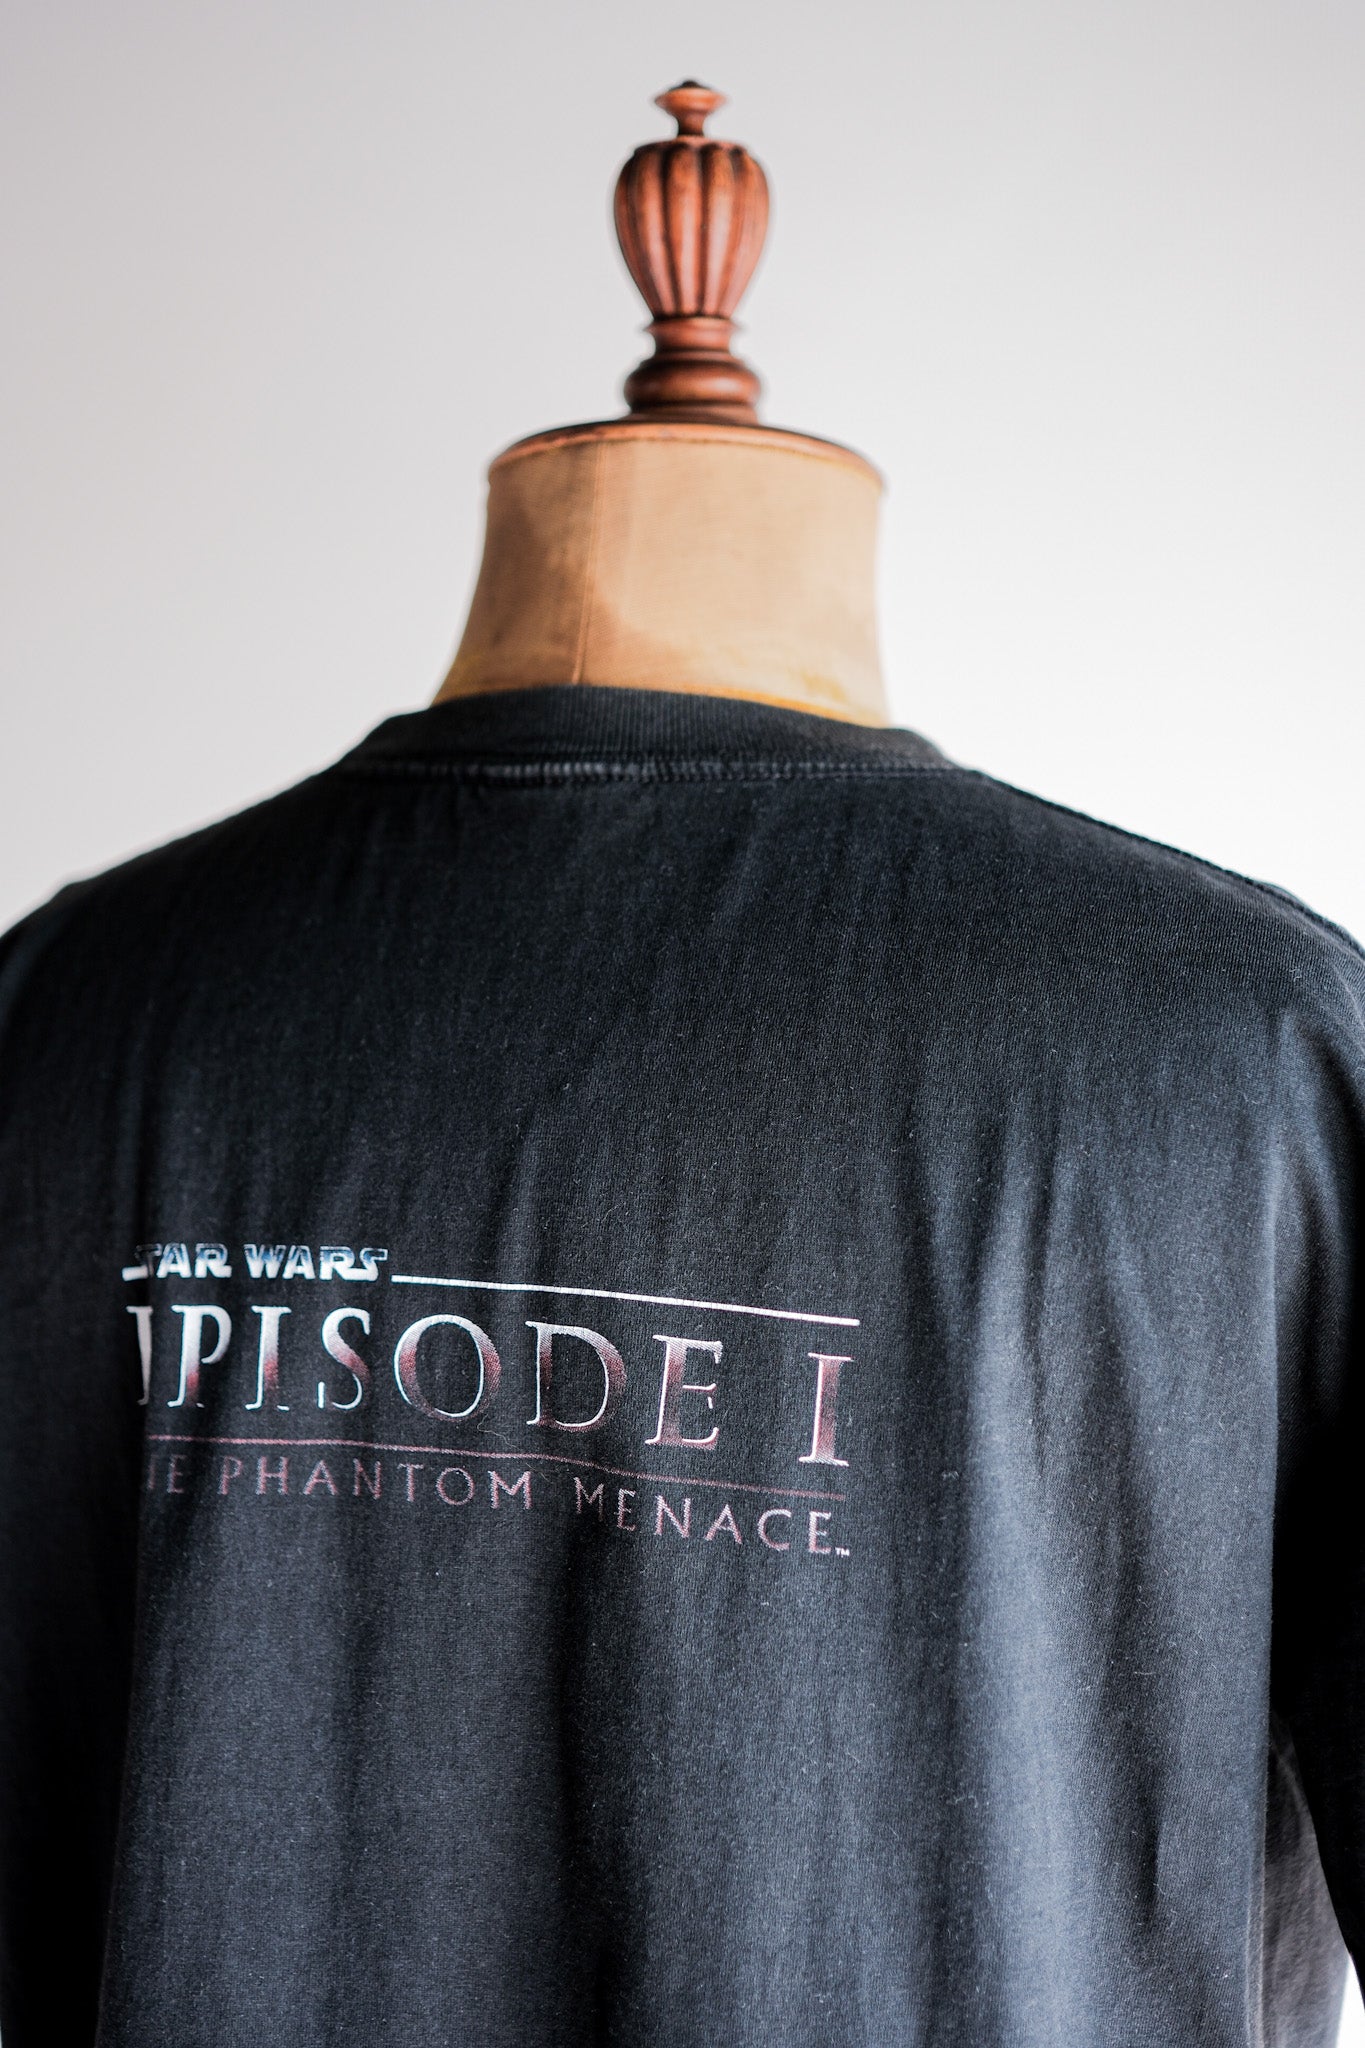 【~90's】Vintage Bootleg Movie Print T-shirt "Star Wars Episode I"